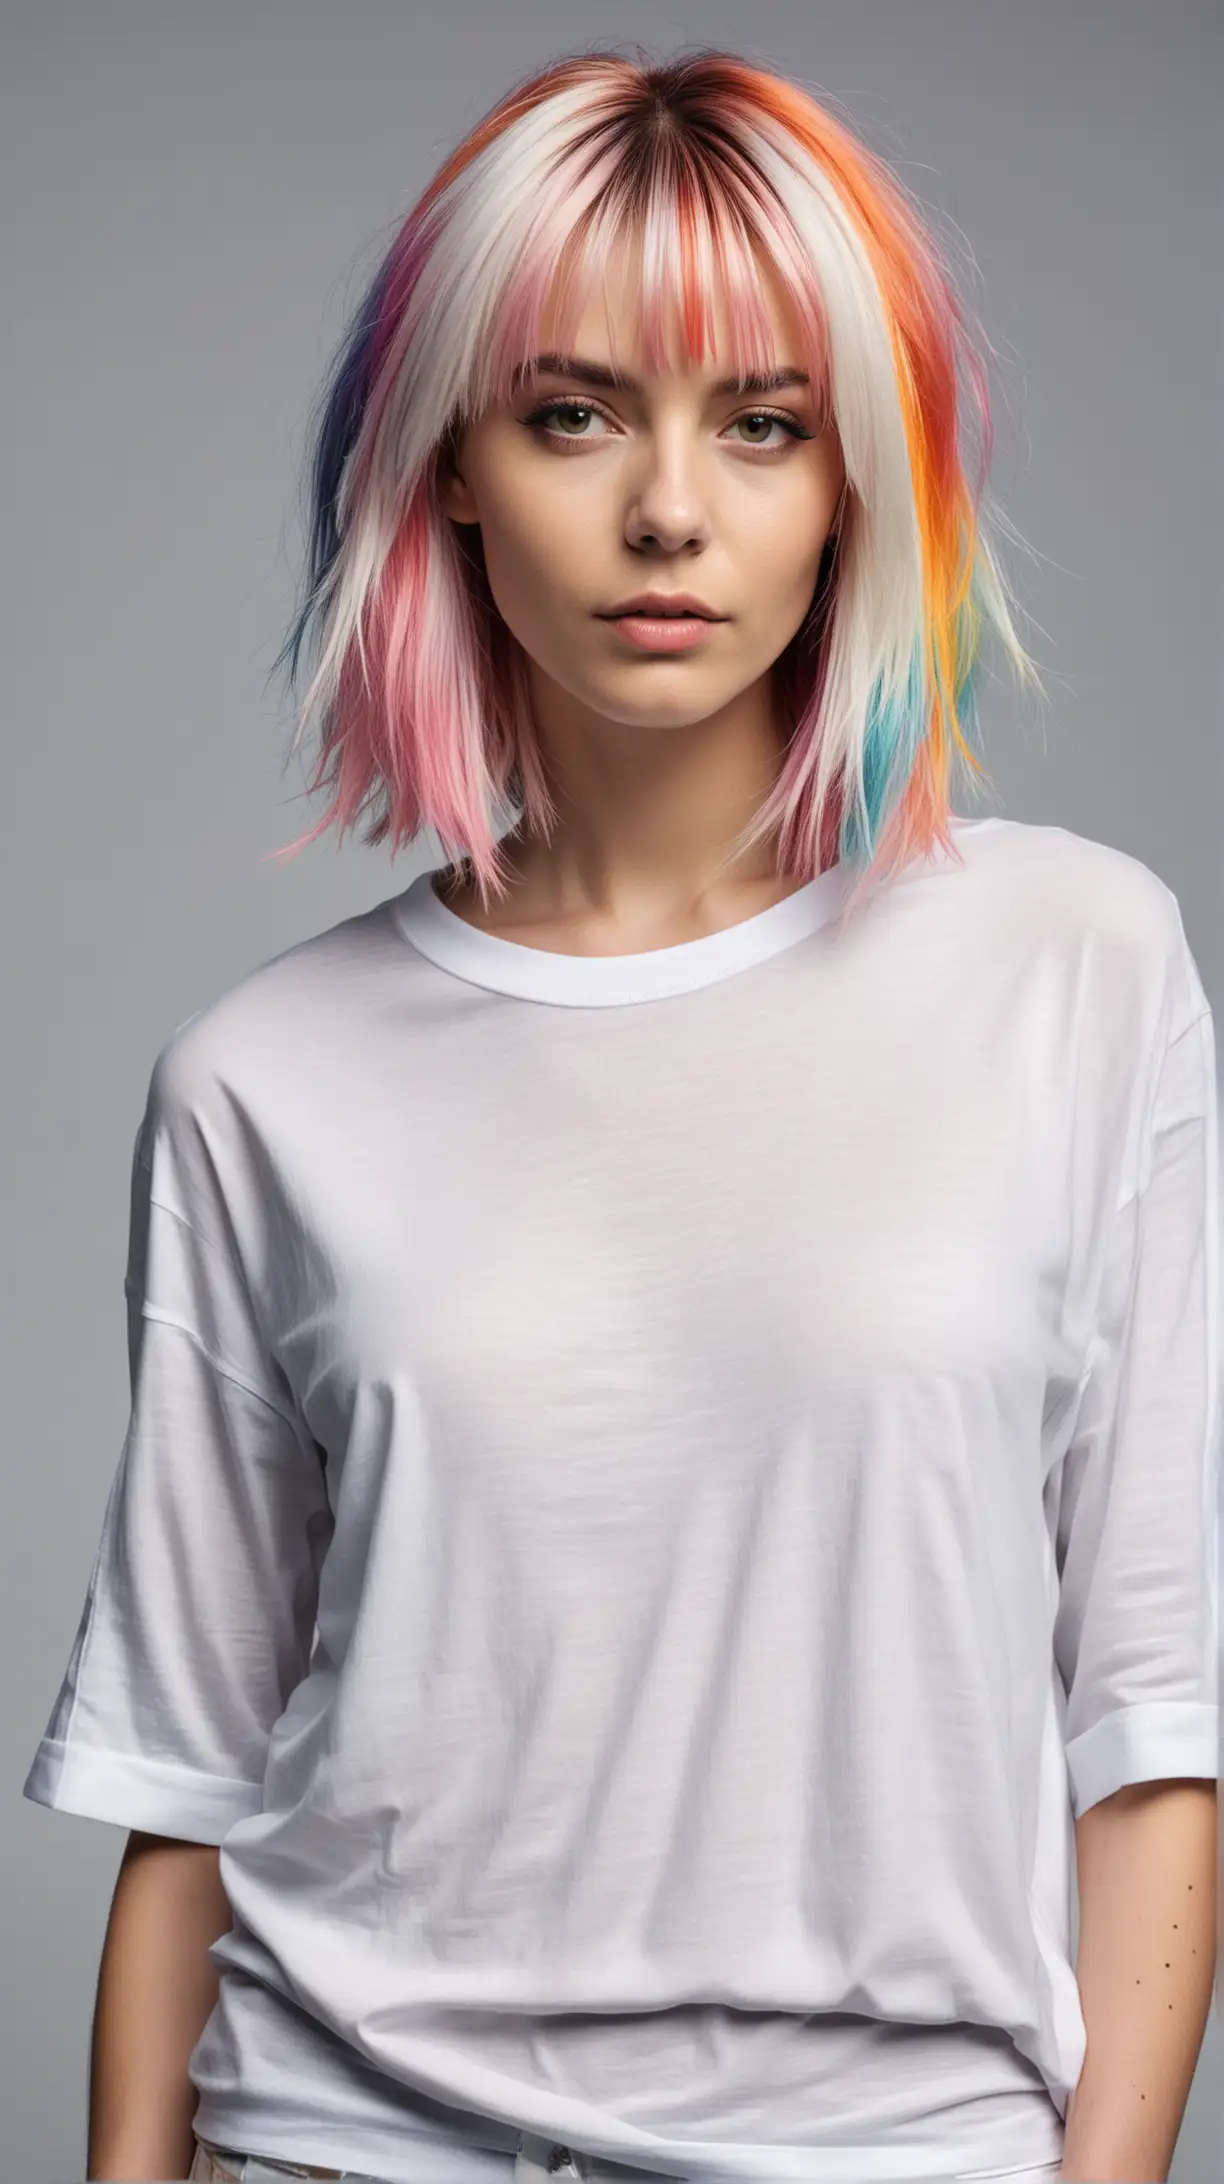 Stylish Avantgarde Haircut on a Vibrant Model in a White Tshirt